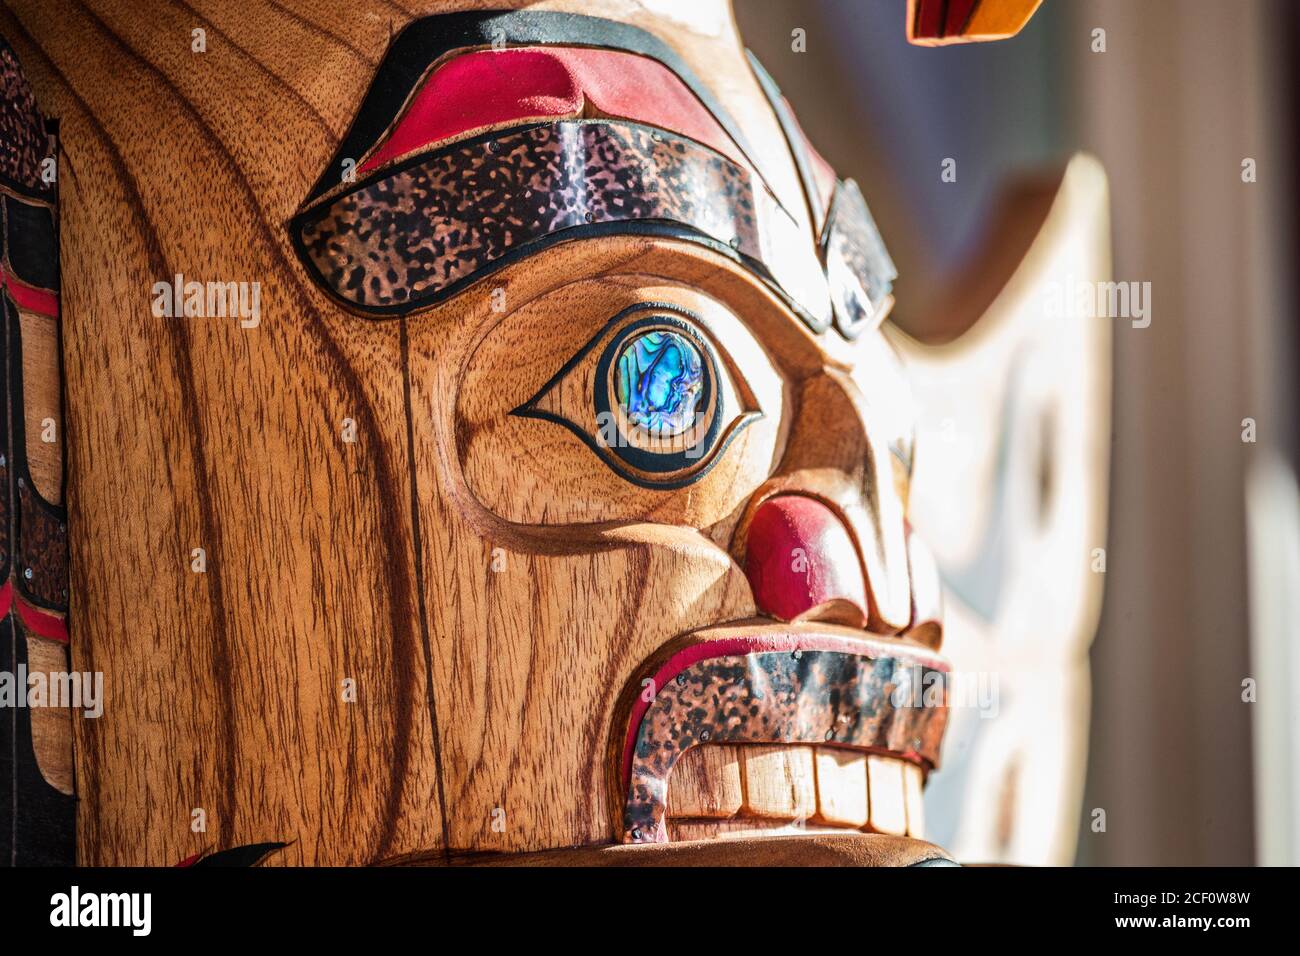 Totem sculpture art on wood pole in Alaska. Stock Photo